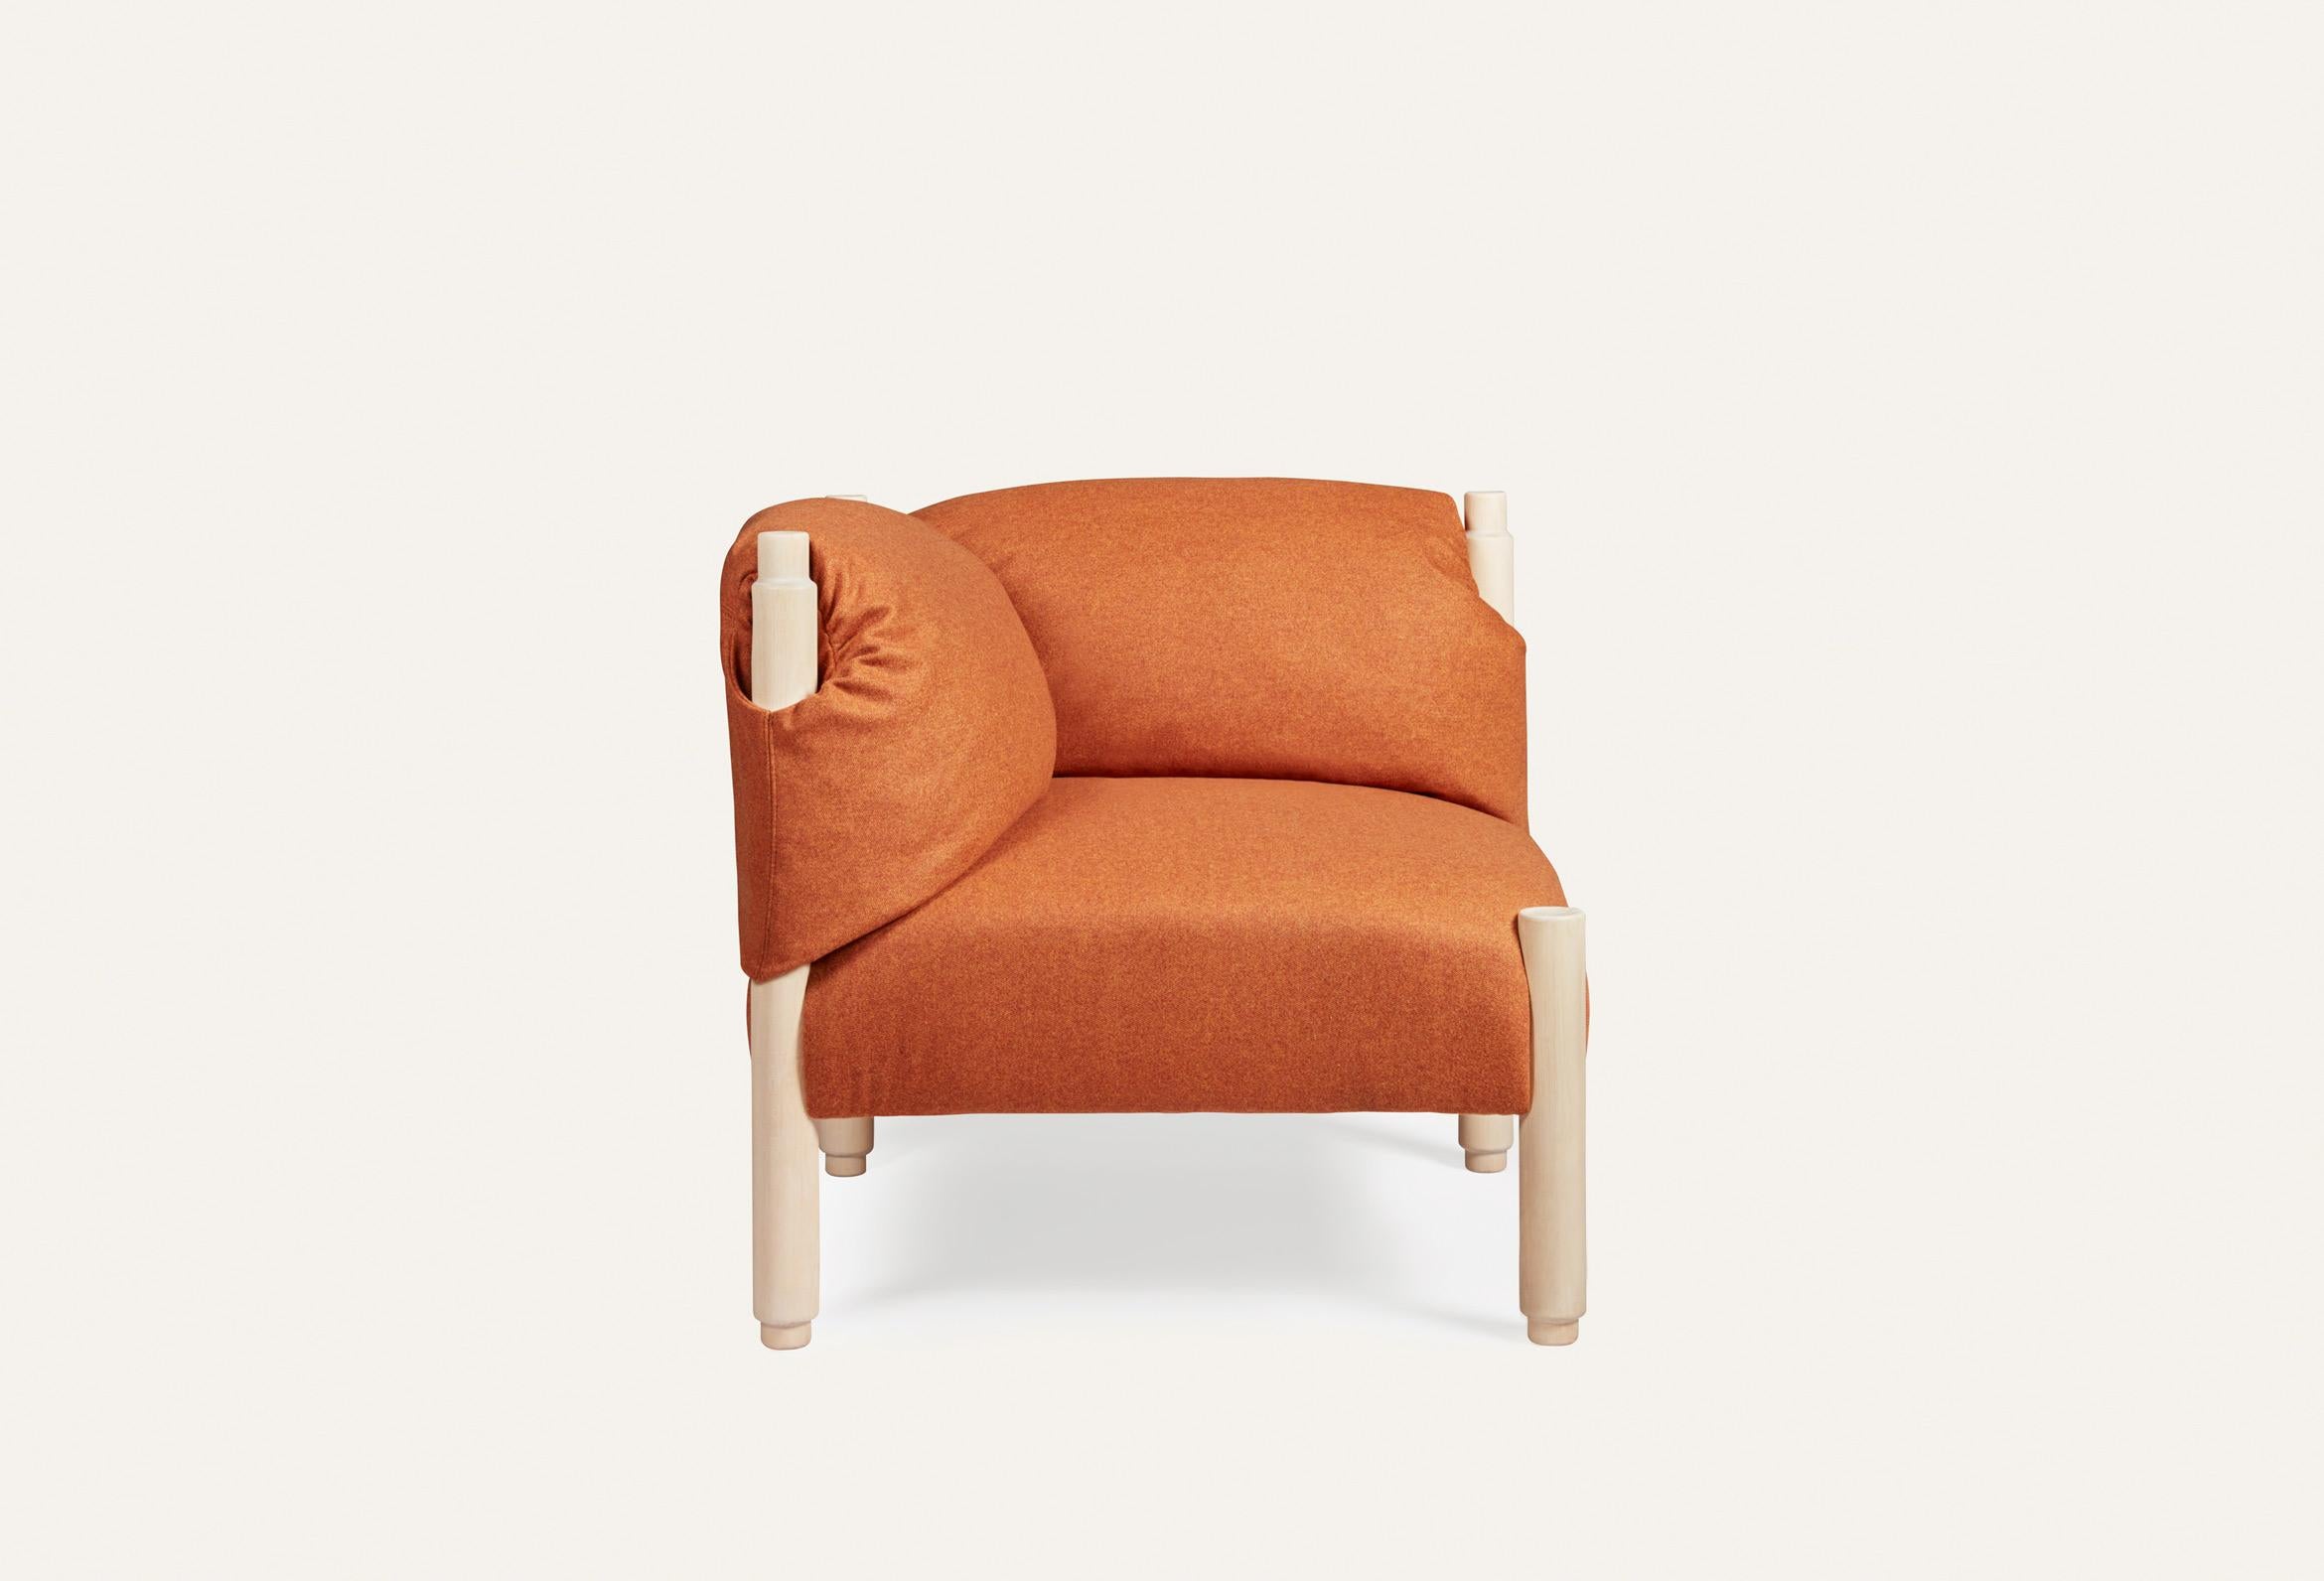 Postmoderne Canapé Stand By Me naturel et orange par Storängen Design en vente